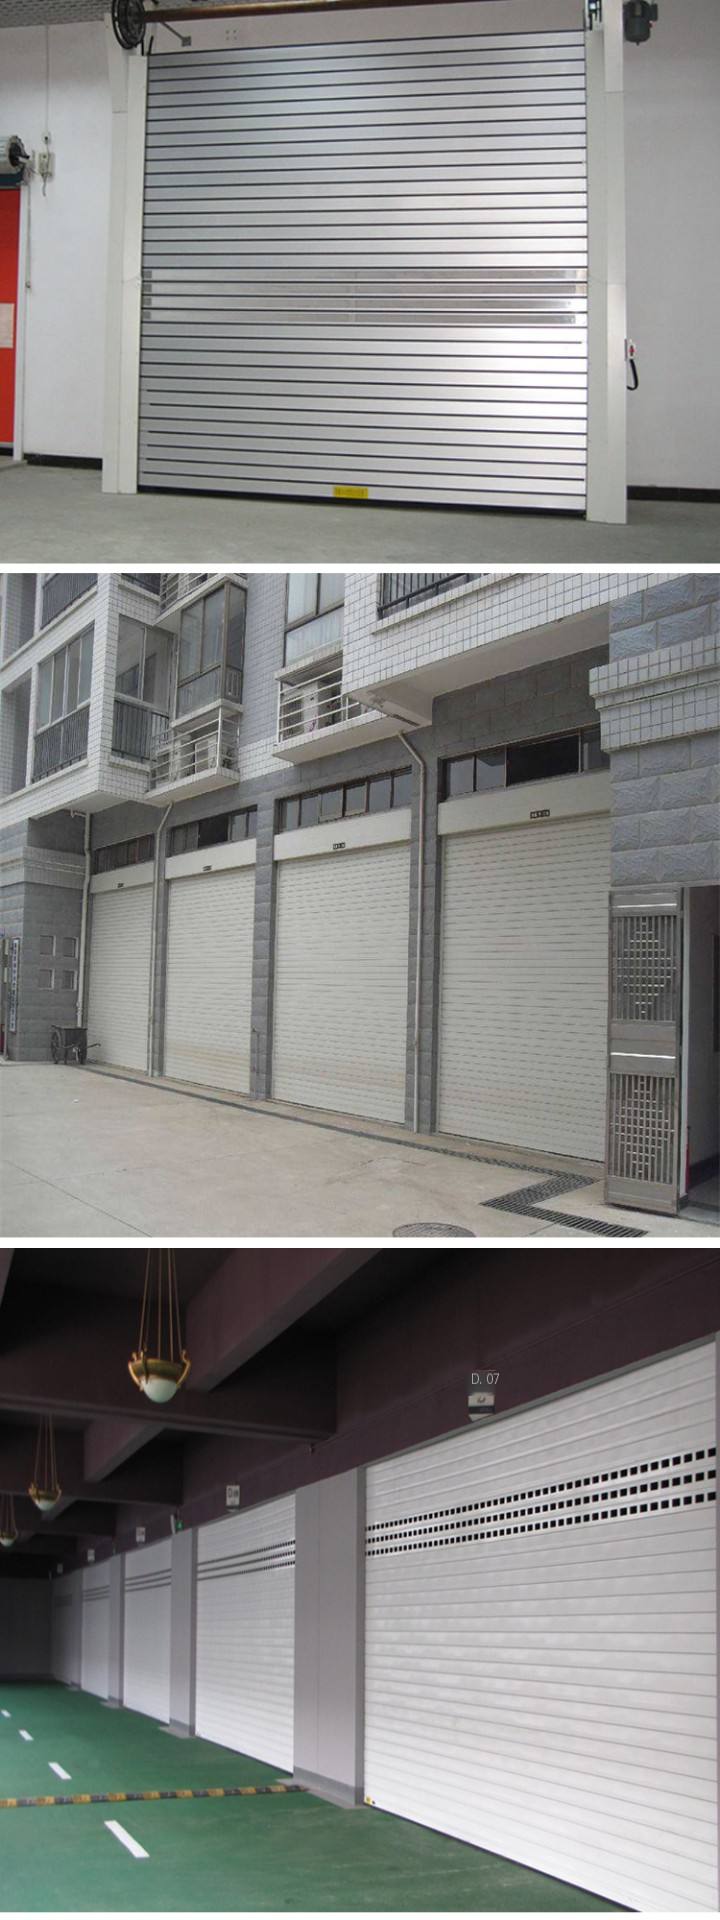 Zhongyi Villa's aluminum profile rolling gate door-to-door service supports customization of multiple sizes